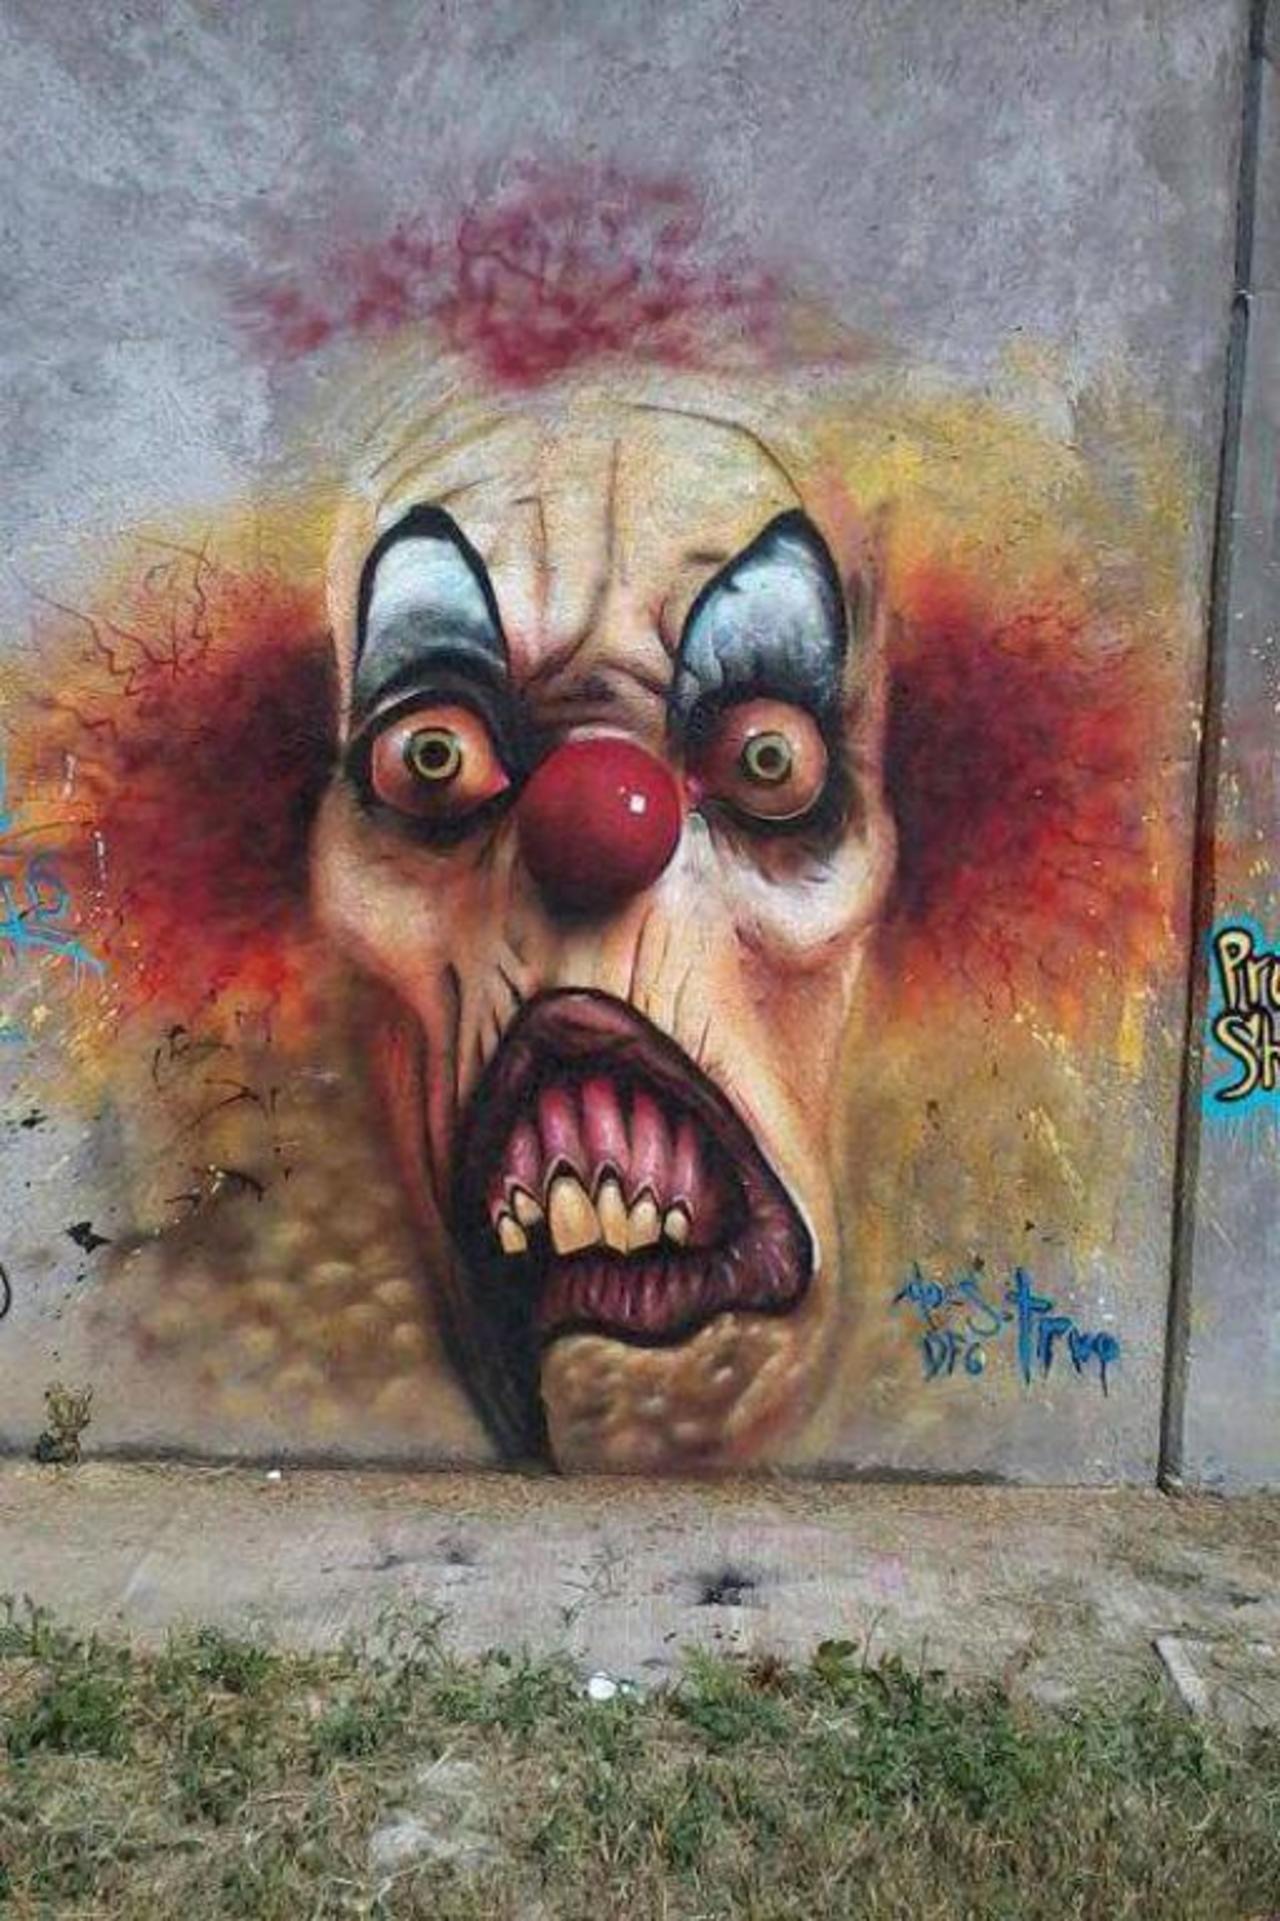 TRUO INSANE #CLOWN #streetart #painting #mural #art #photo #urbanart #graffiti #world #banksy http://t.co/a82ecTeSwk